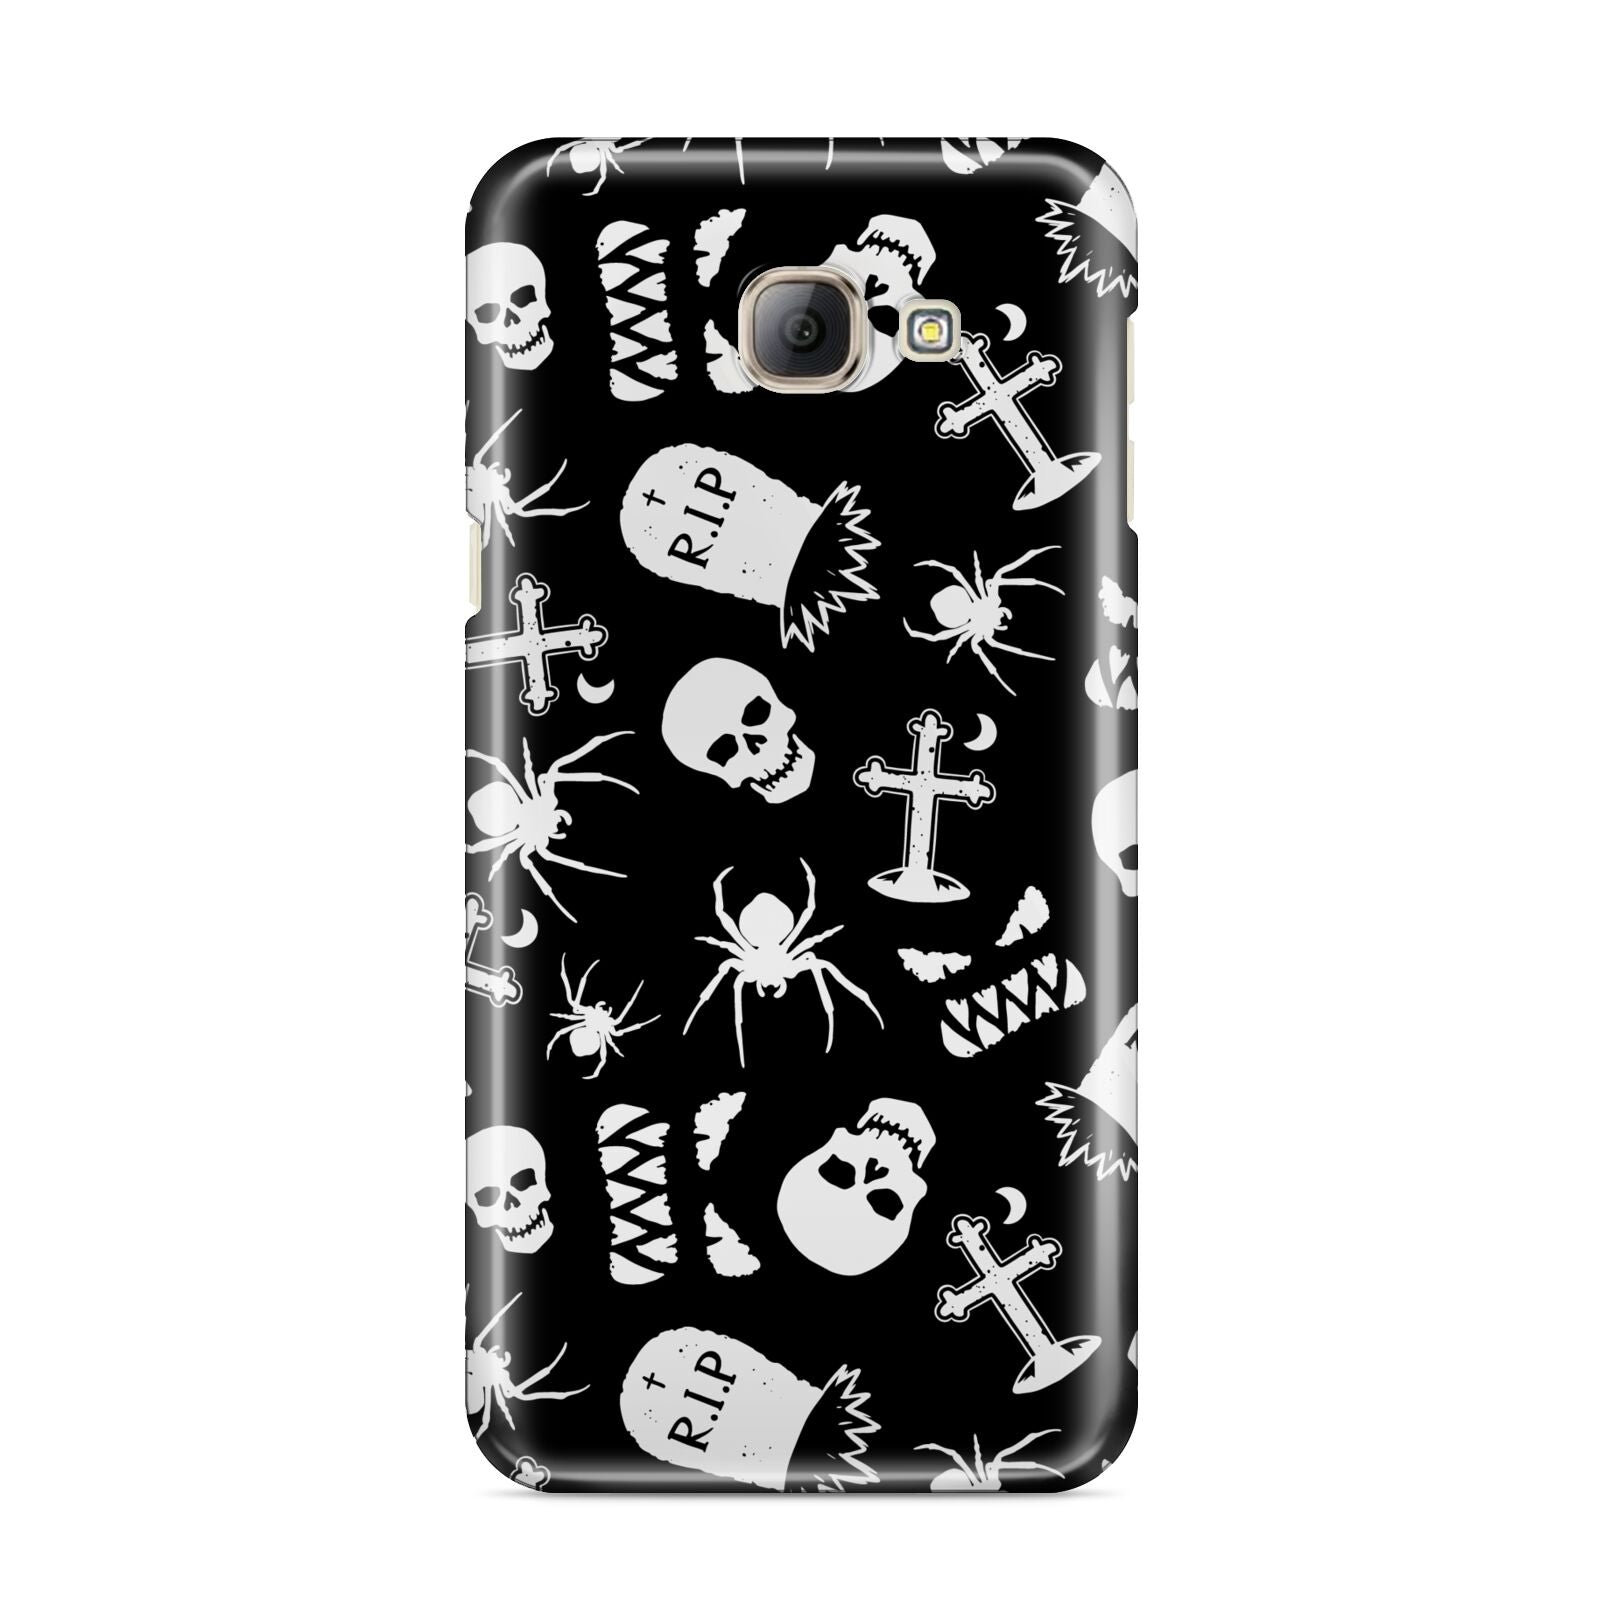 Spooky Illustrations Samsung Galaxy A8 2016 Case